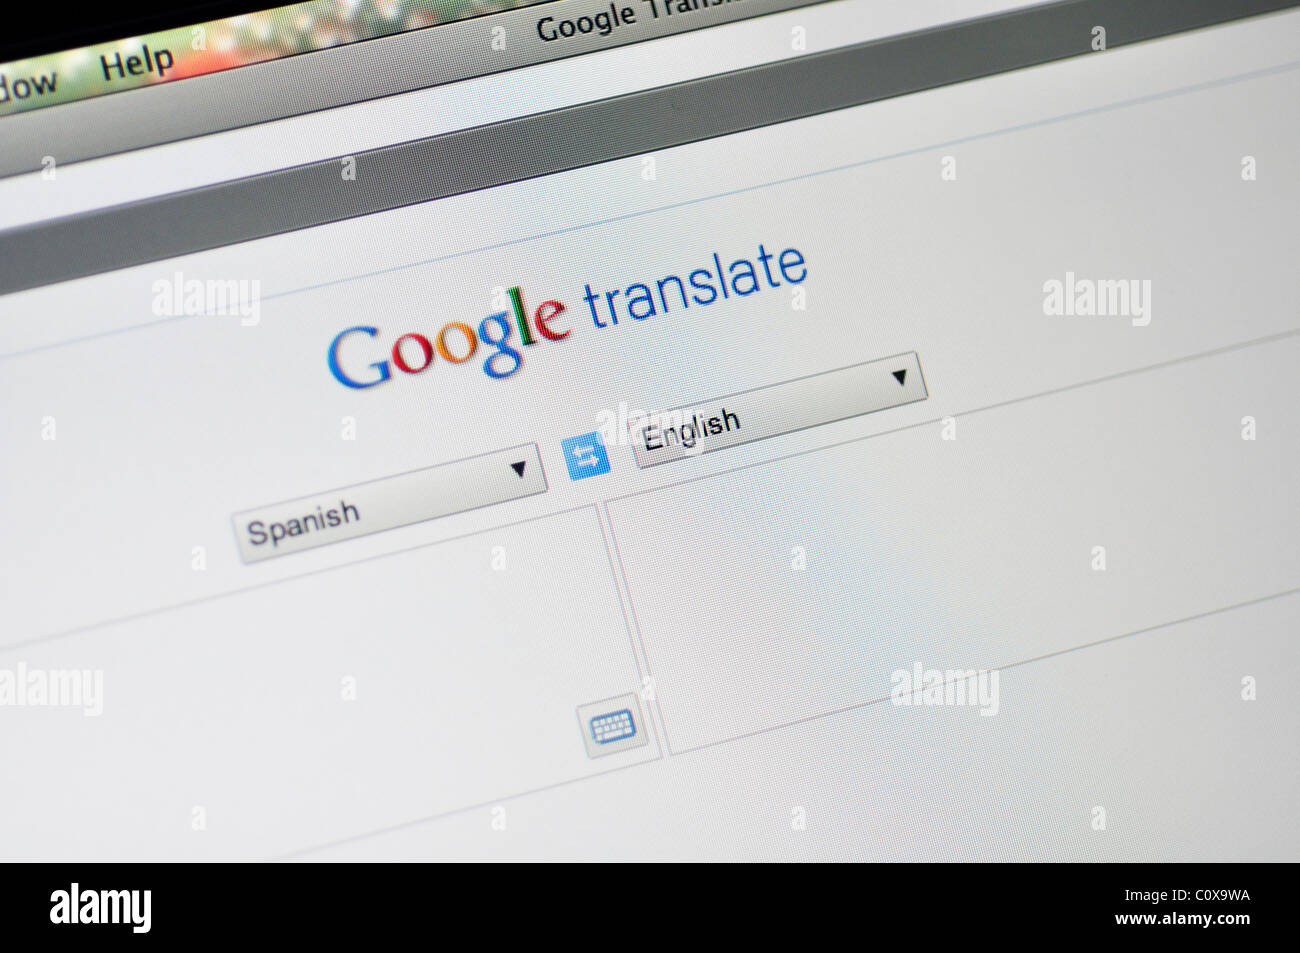 Google translate website -  translate foreign languages Stock Photo